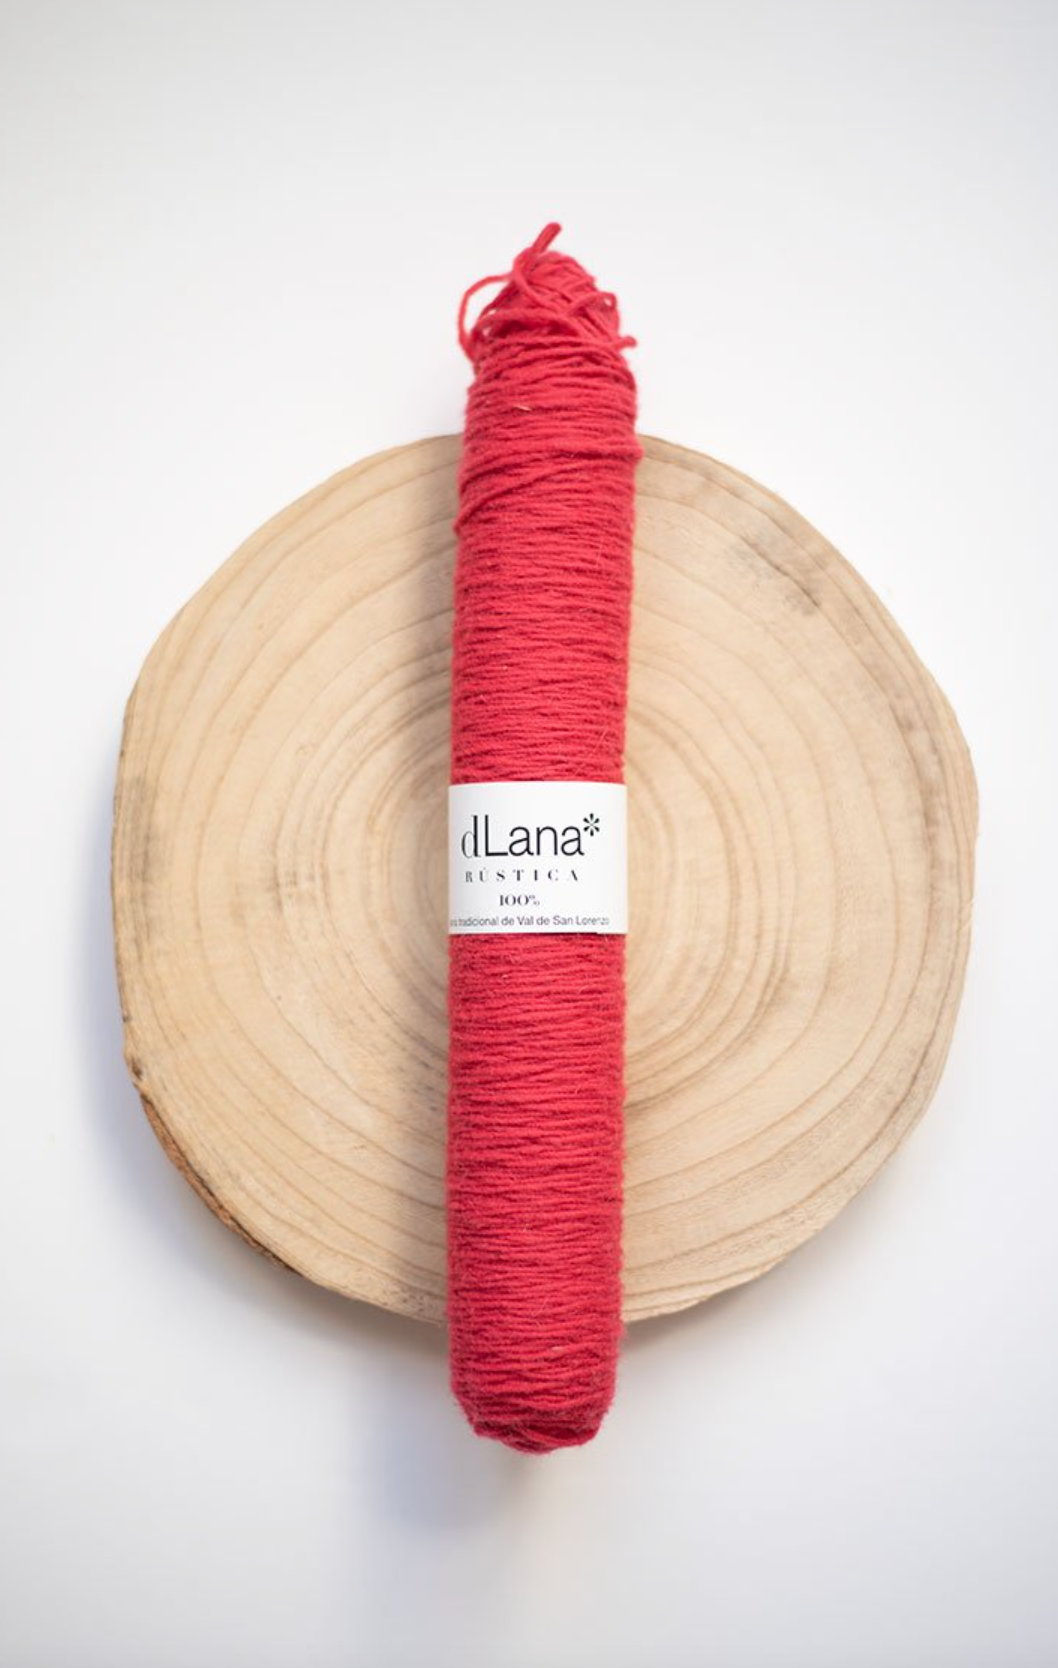 dLana Rustic Wool Yarn - Vivids - The Unusual Pear